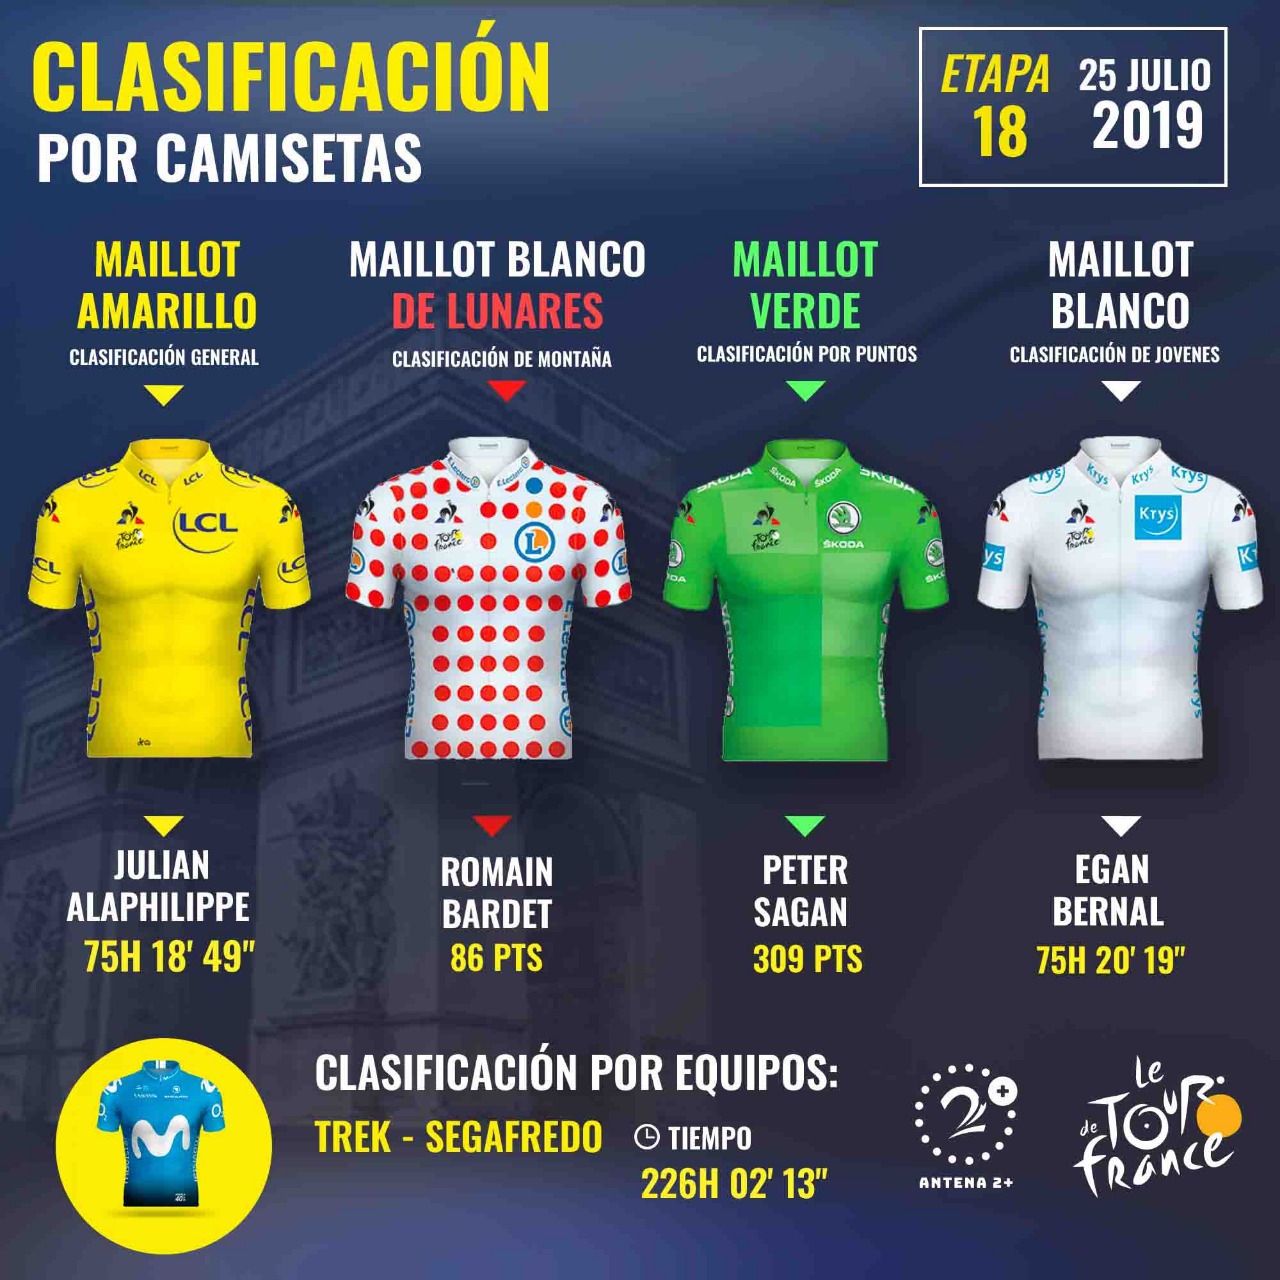 Tour de Francia 2019, clasificaciones, etapa 18